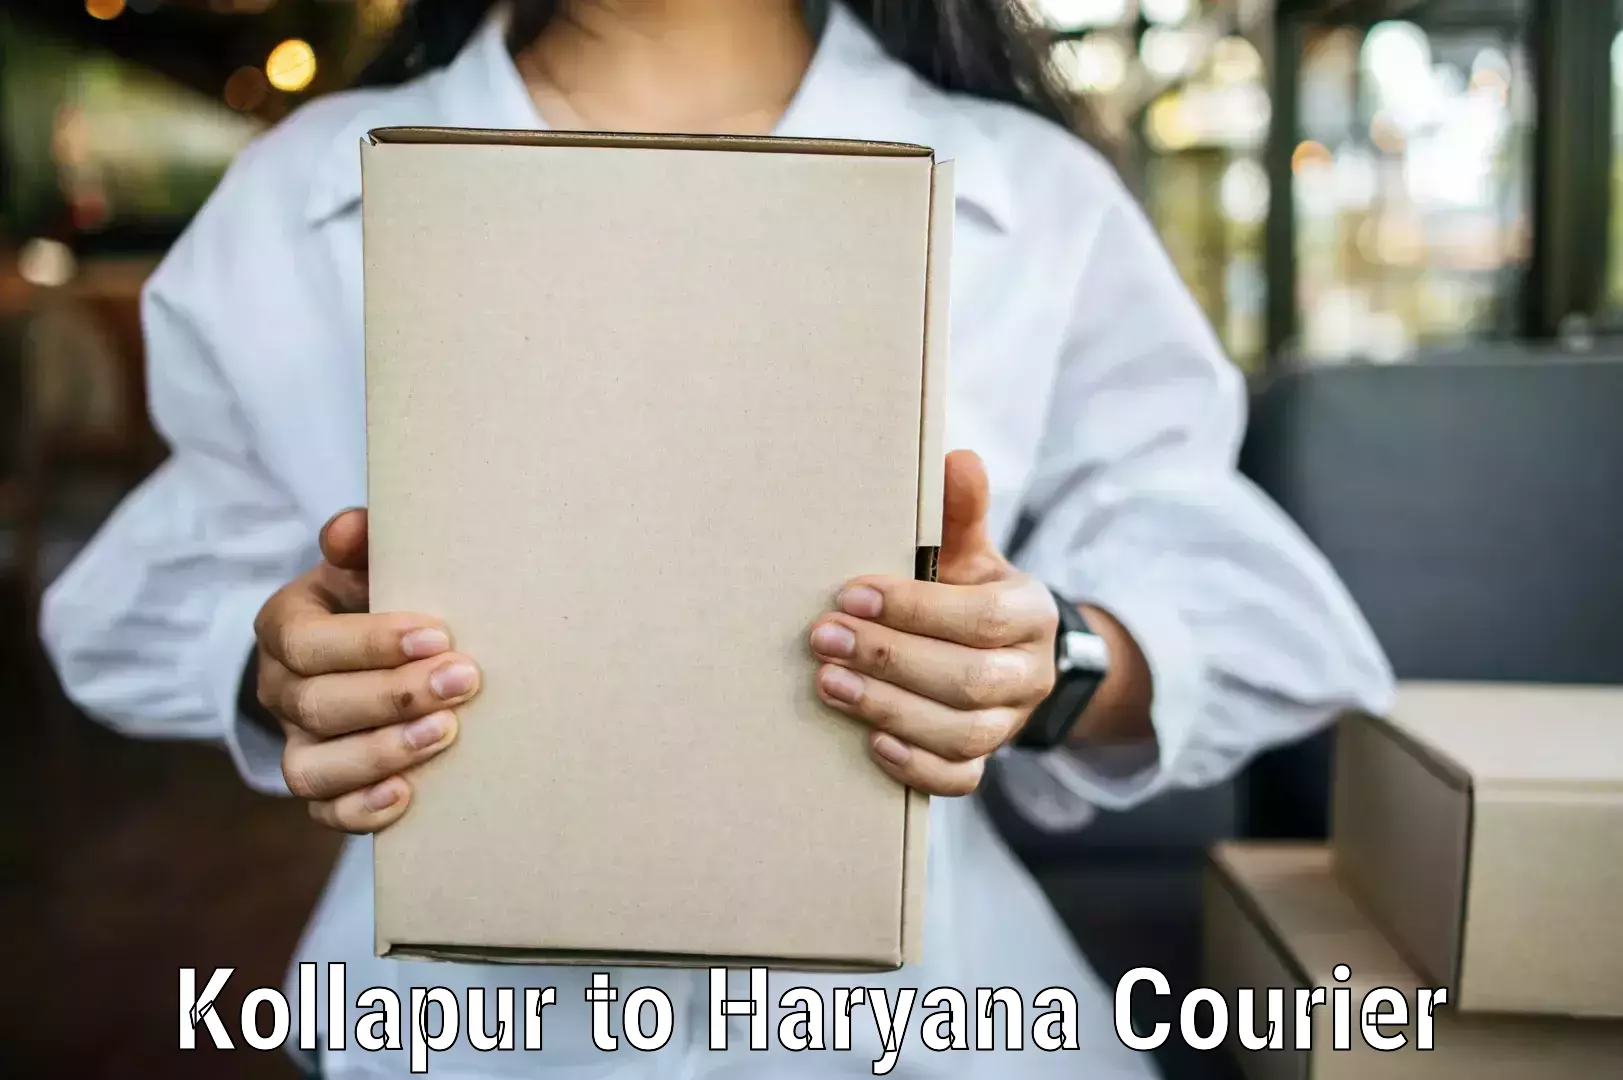 Courier service innovation Kollapur to Gohana